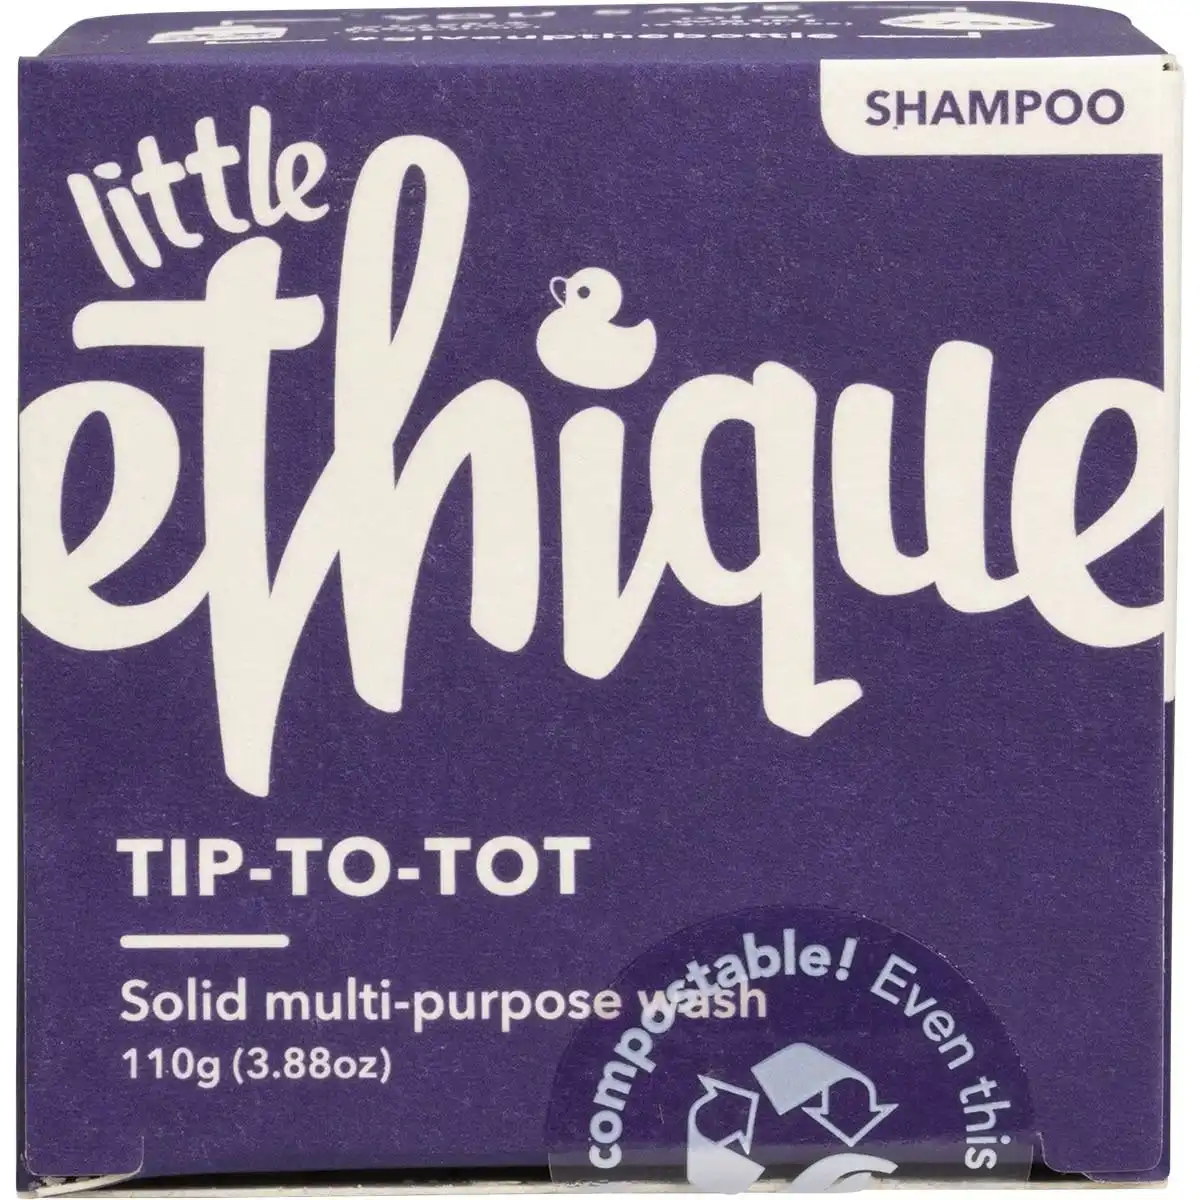 LITTLE ETHIQUE Solid Shampoo & Bodywash Tip-to-Tot 110g